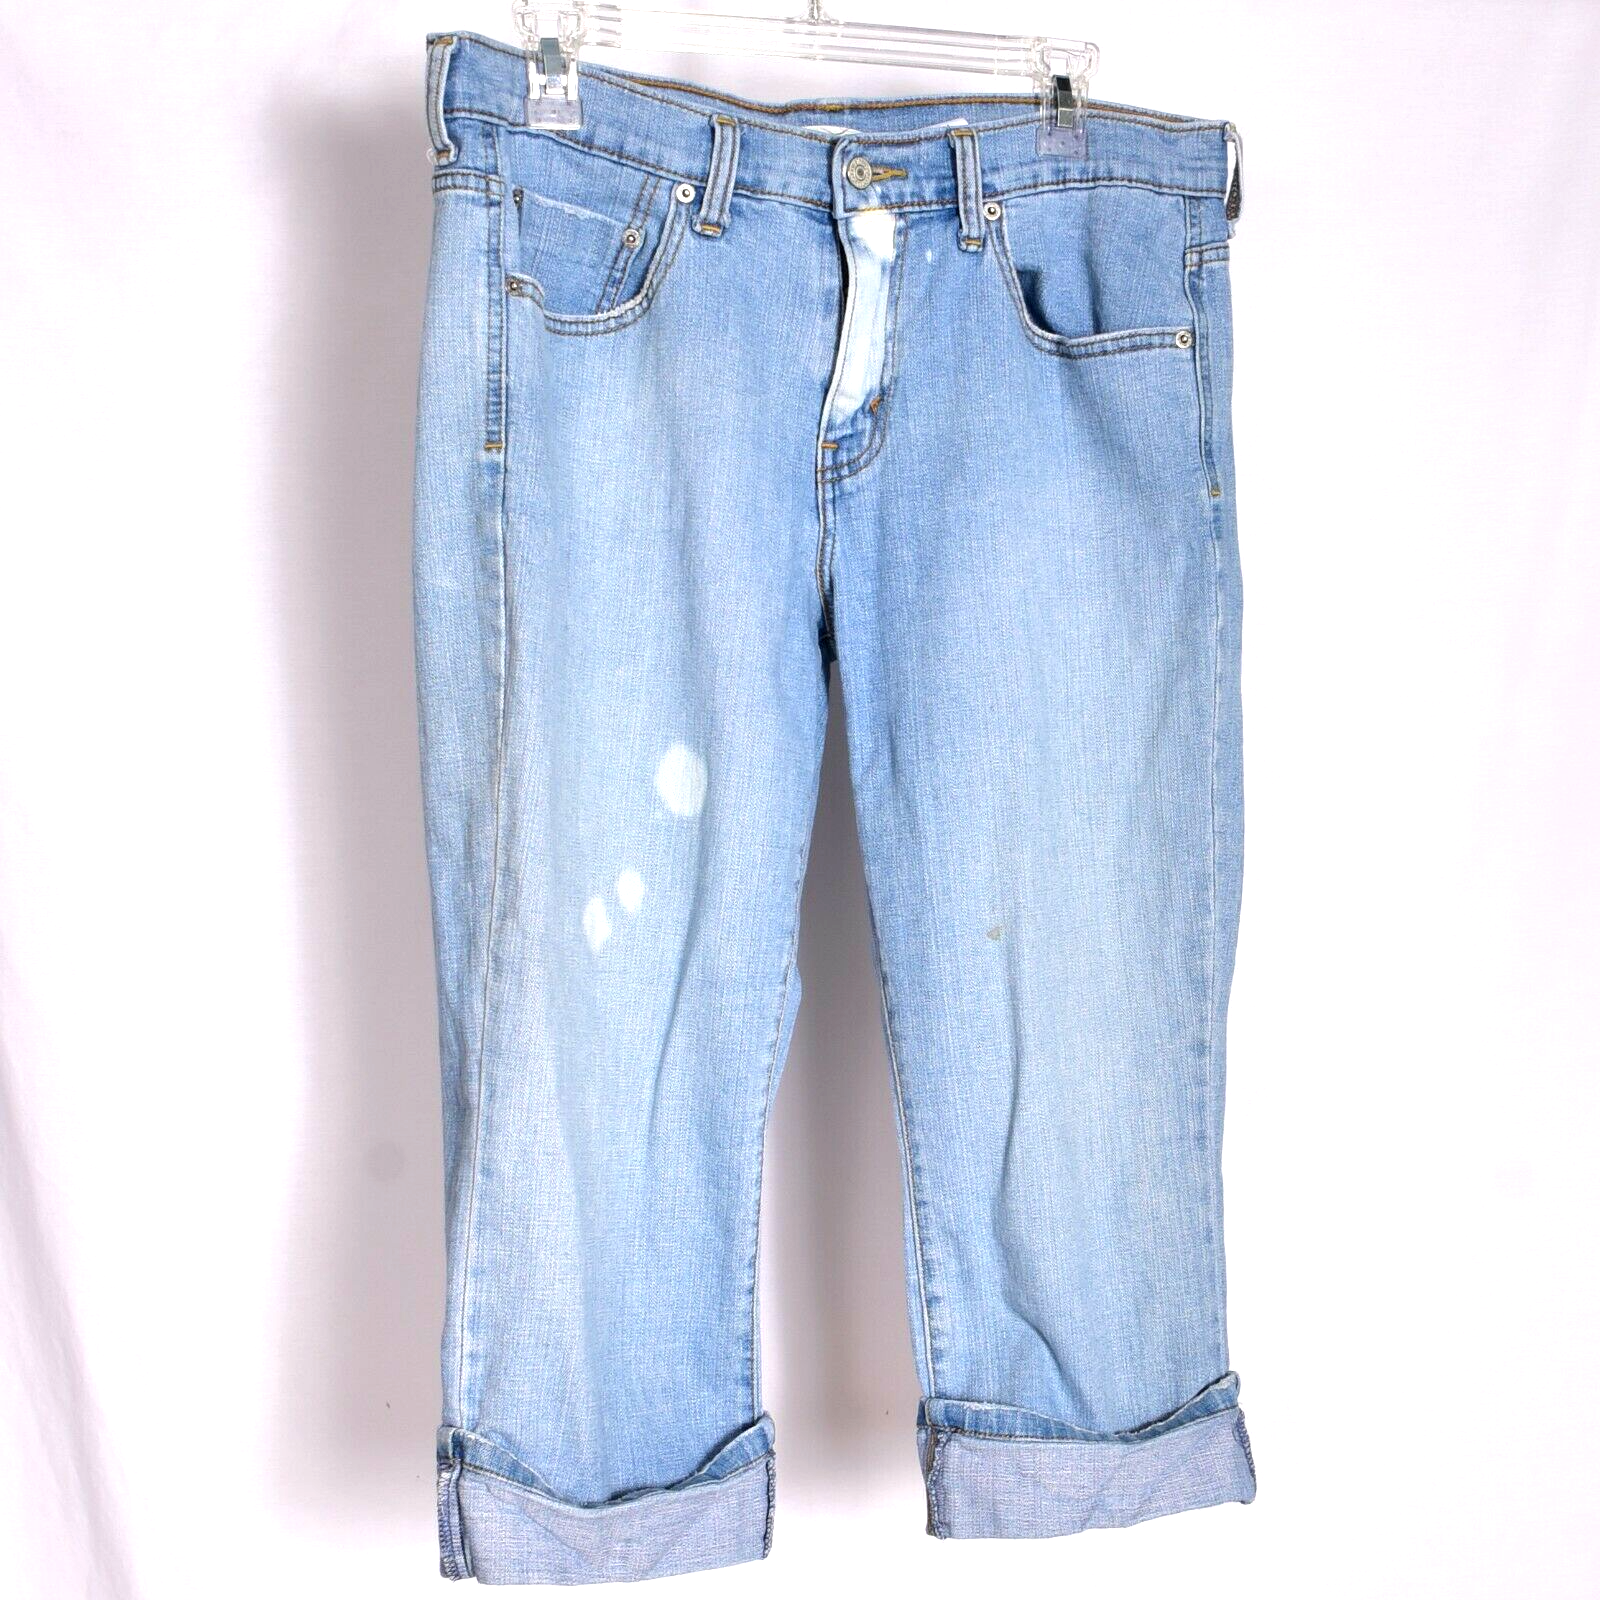 Primary image for Levis 515 Capri Light wash Clorox Splash Jeans Size 12